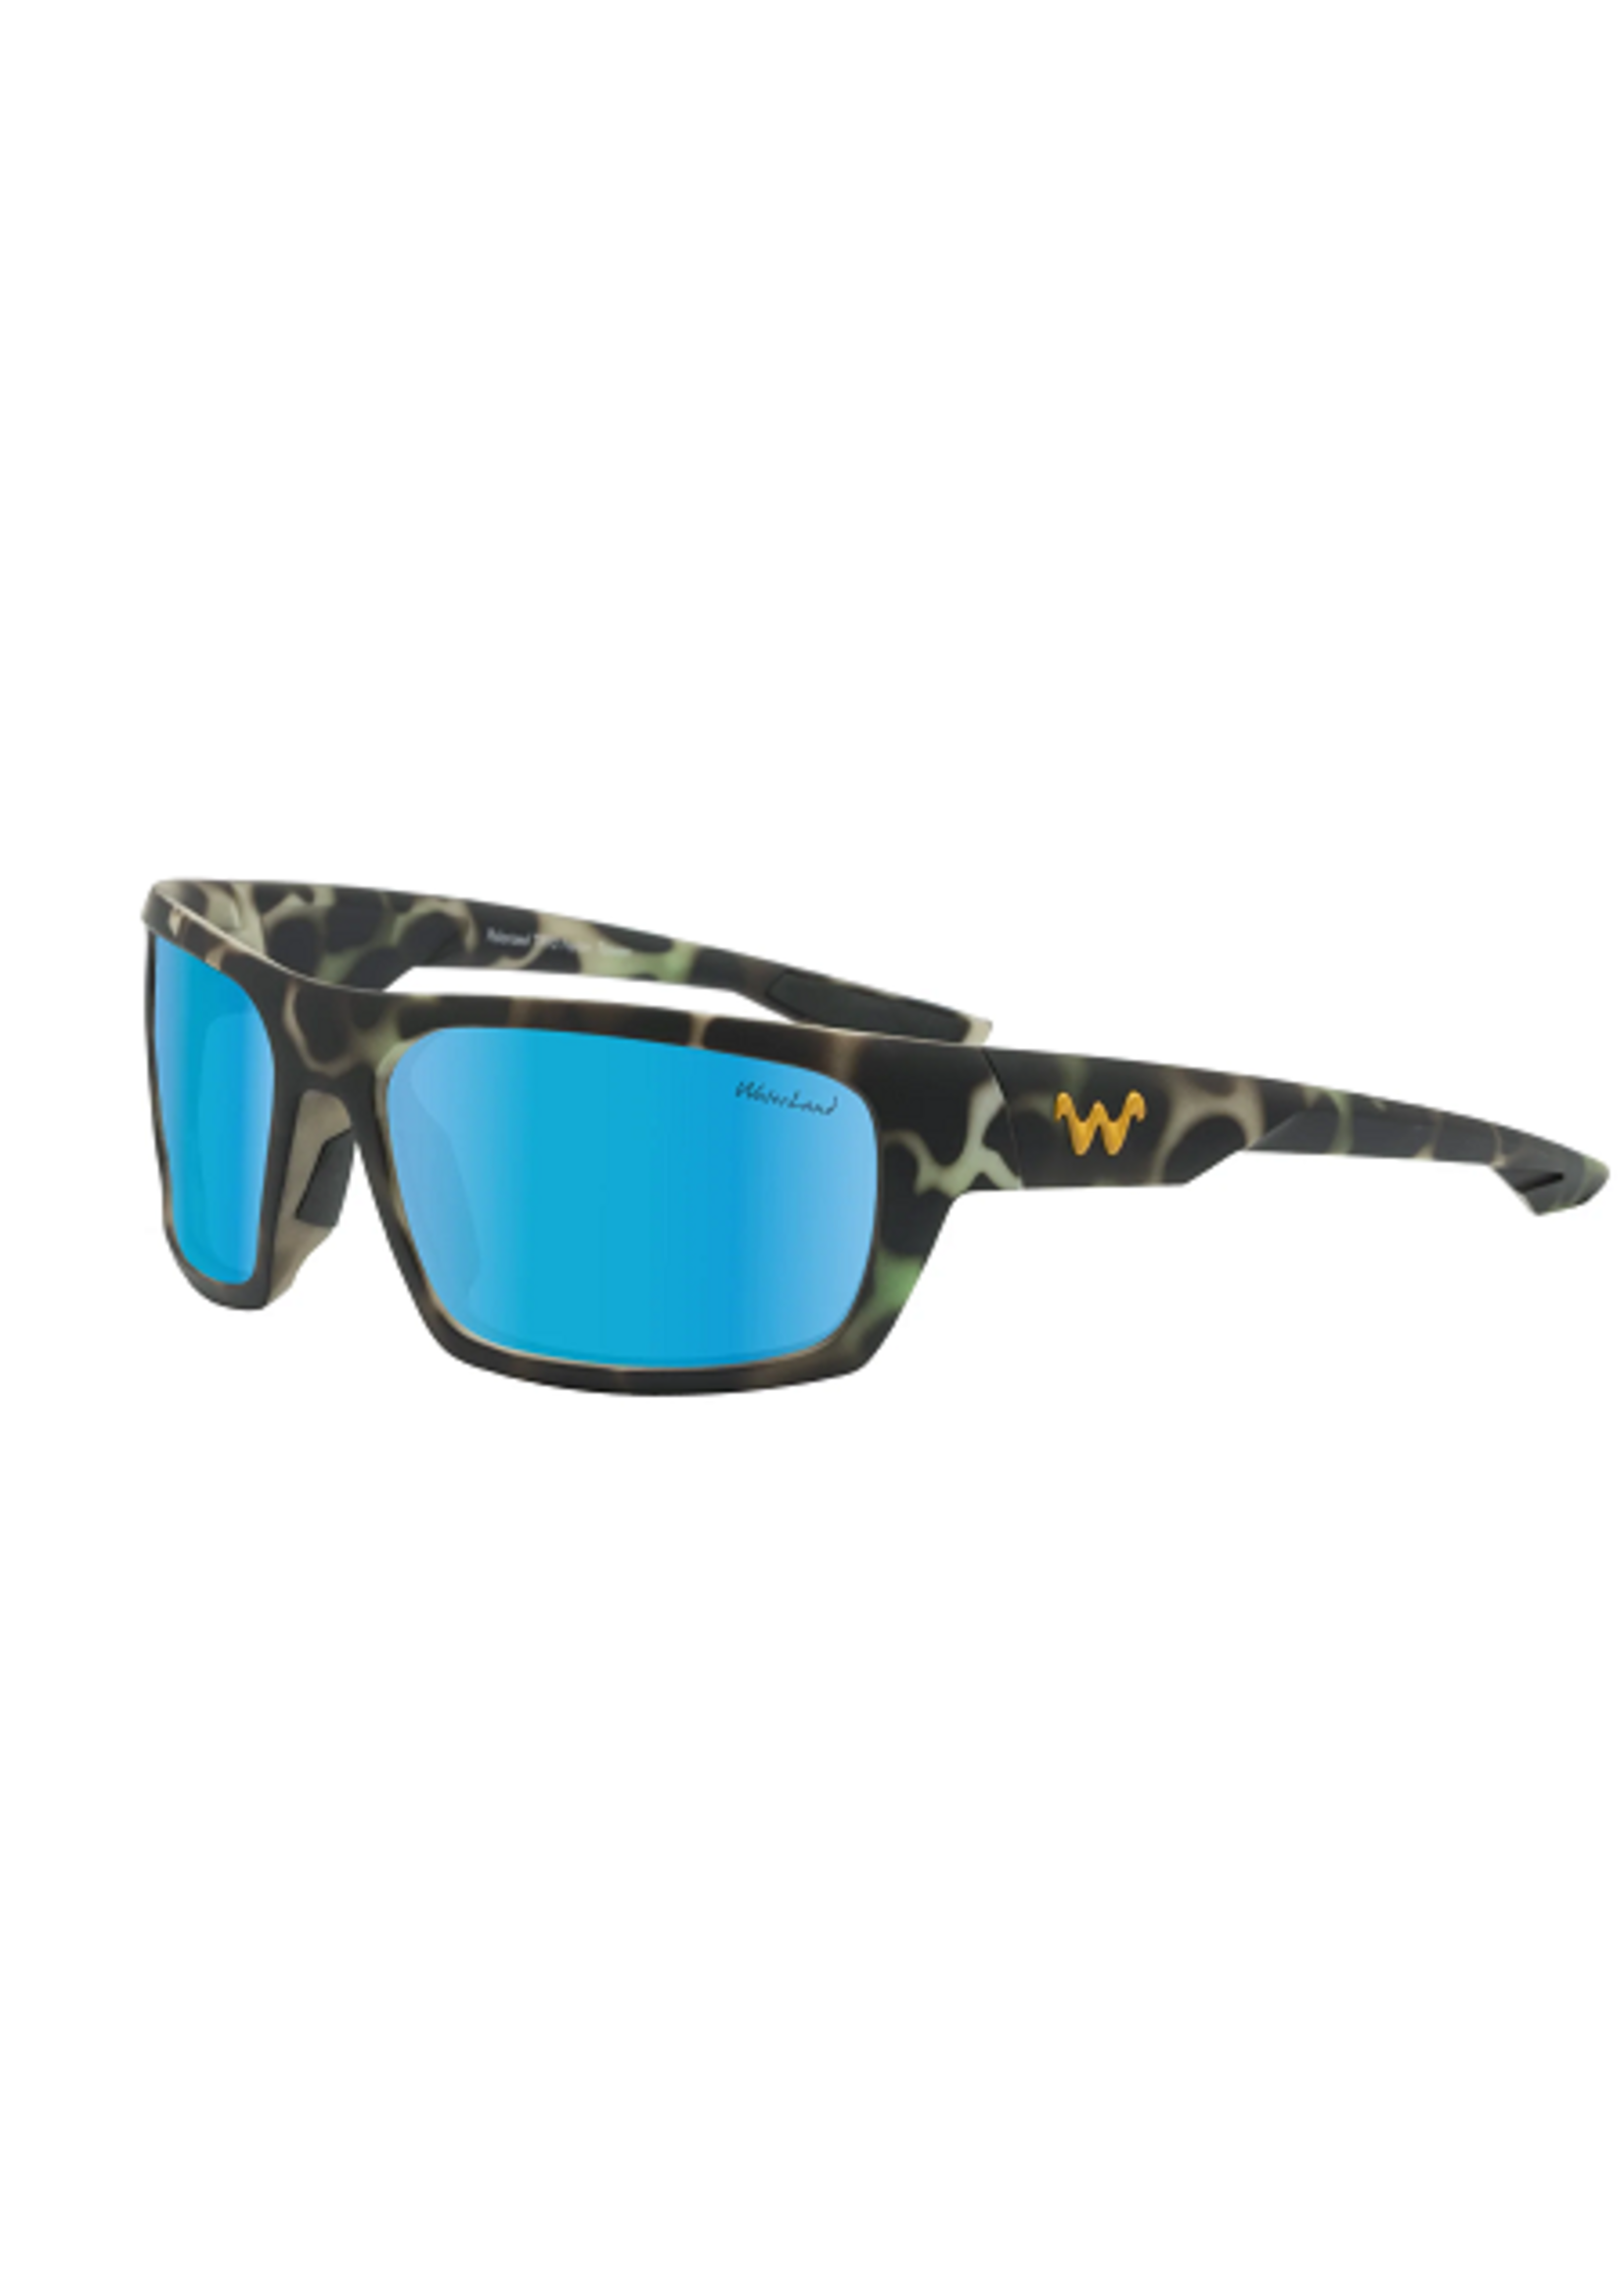 WaterLand Co, LLC. WaterLand Miliken Series Polarized Sunglasses